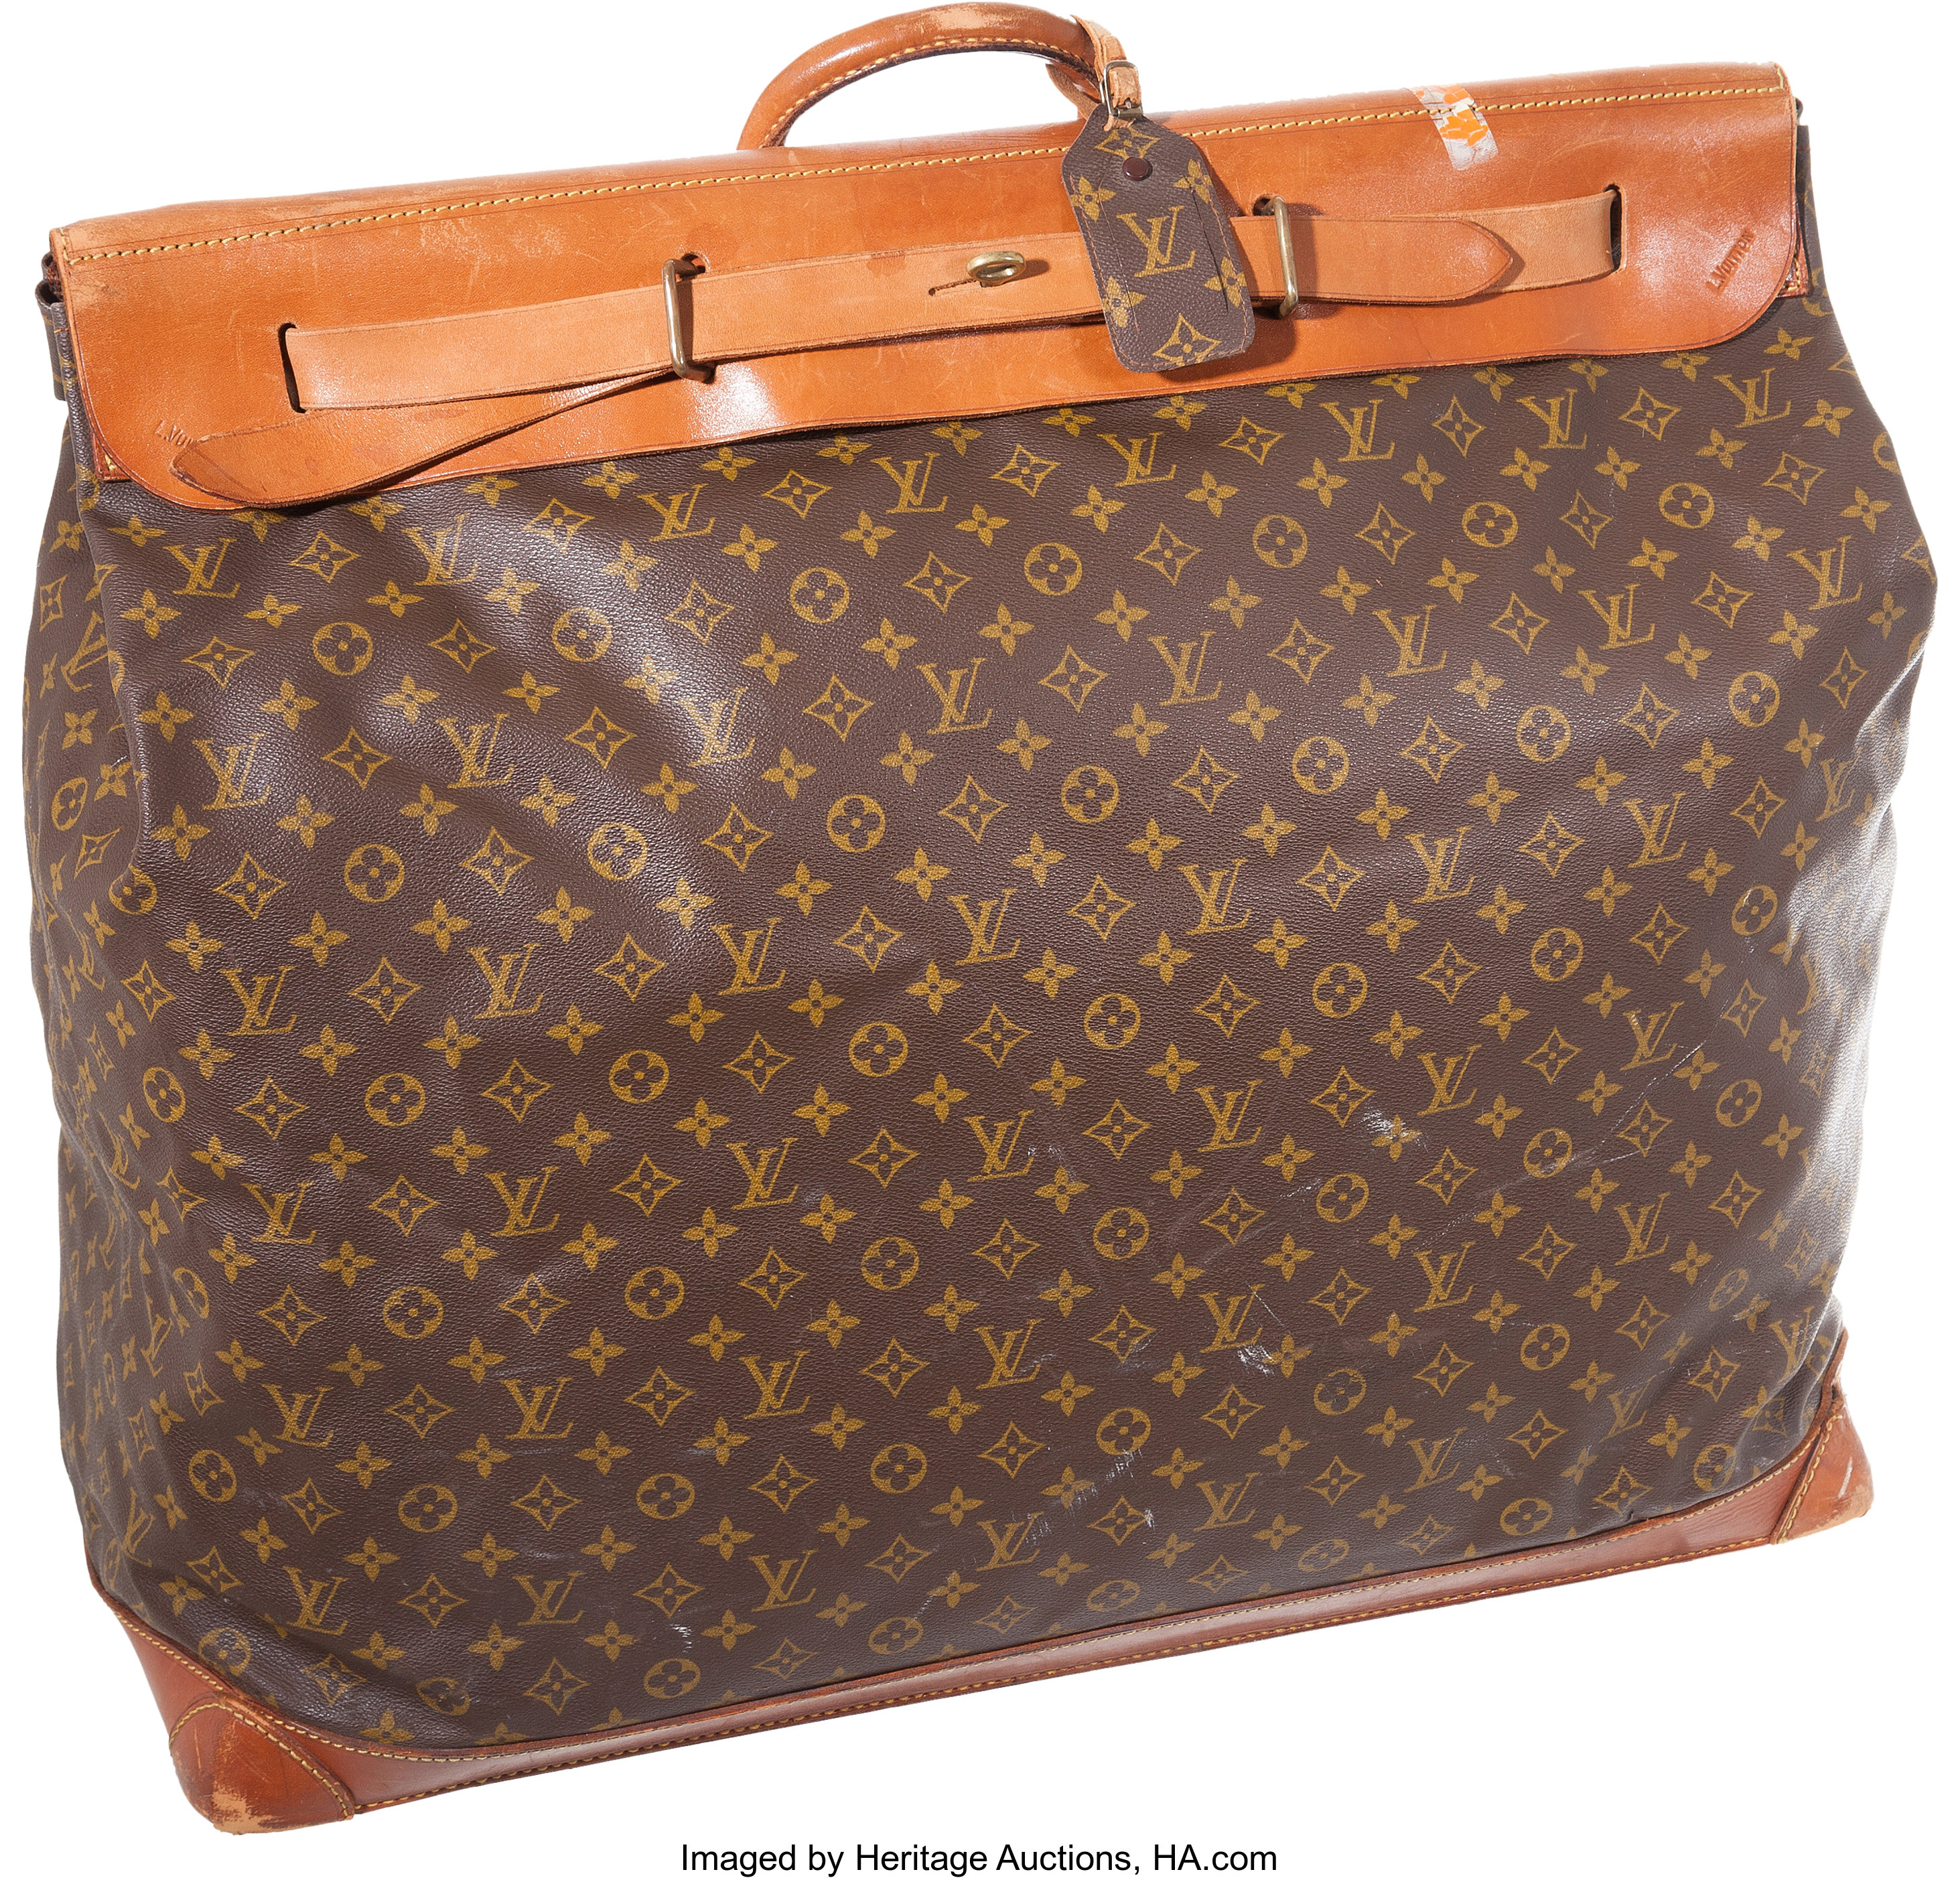 Sold at Auction: Vintage Louis Vuitton monogram travel bag steamer